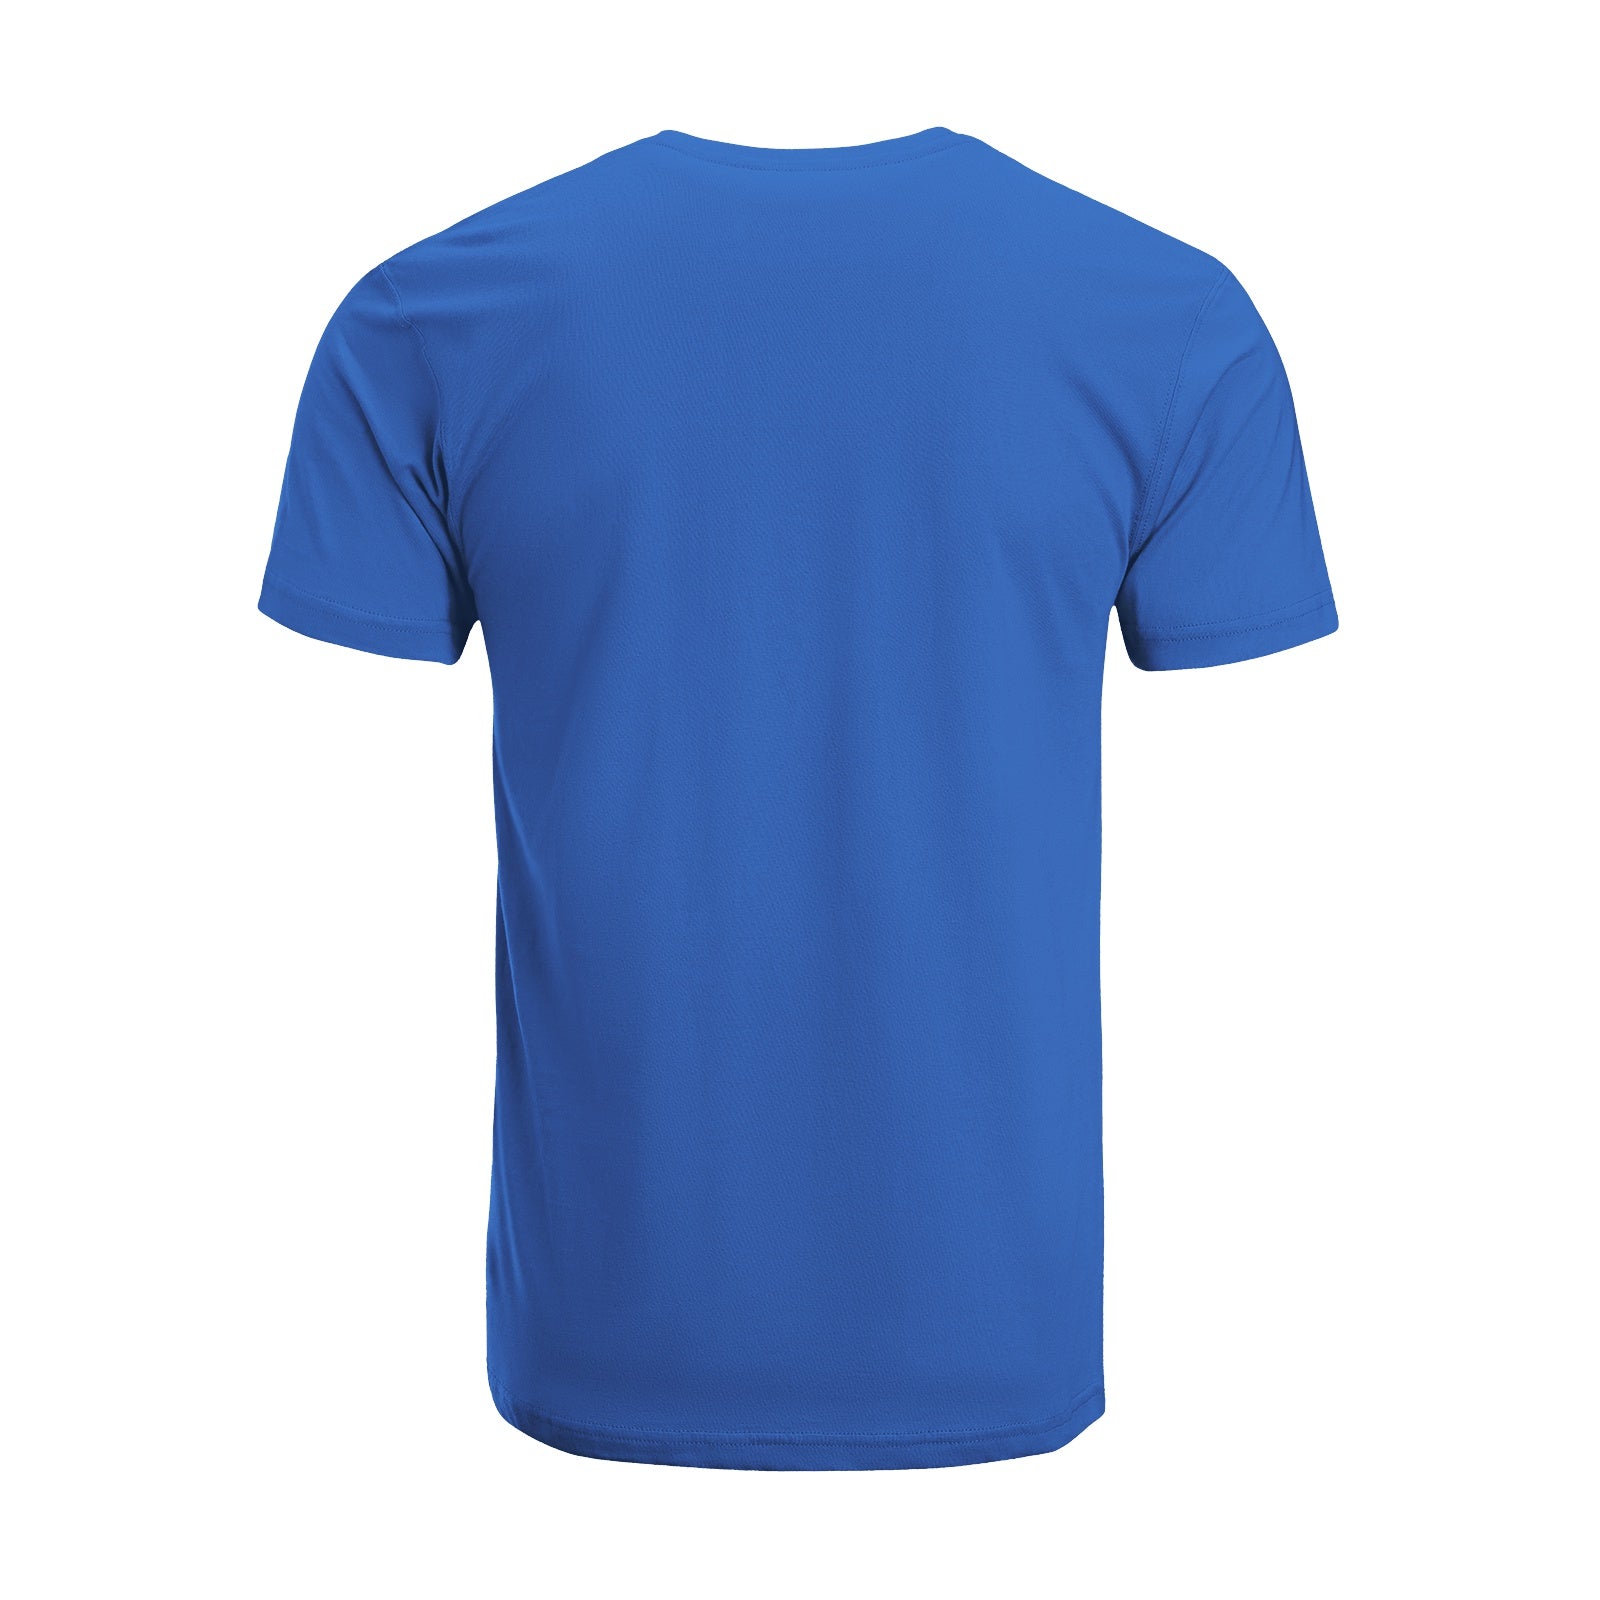 Unisex Short Sleeve Crew Neck Cotton Jersey T-Shirt CAT 46 - Tara-Outfits.com